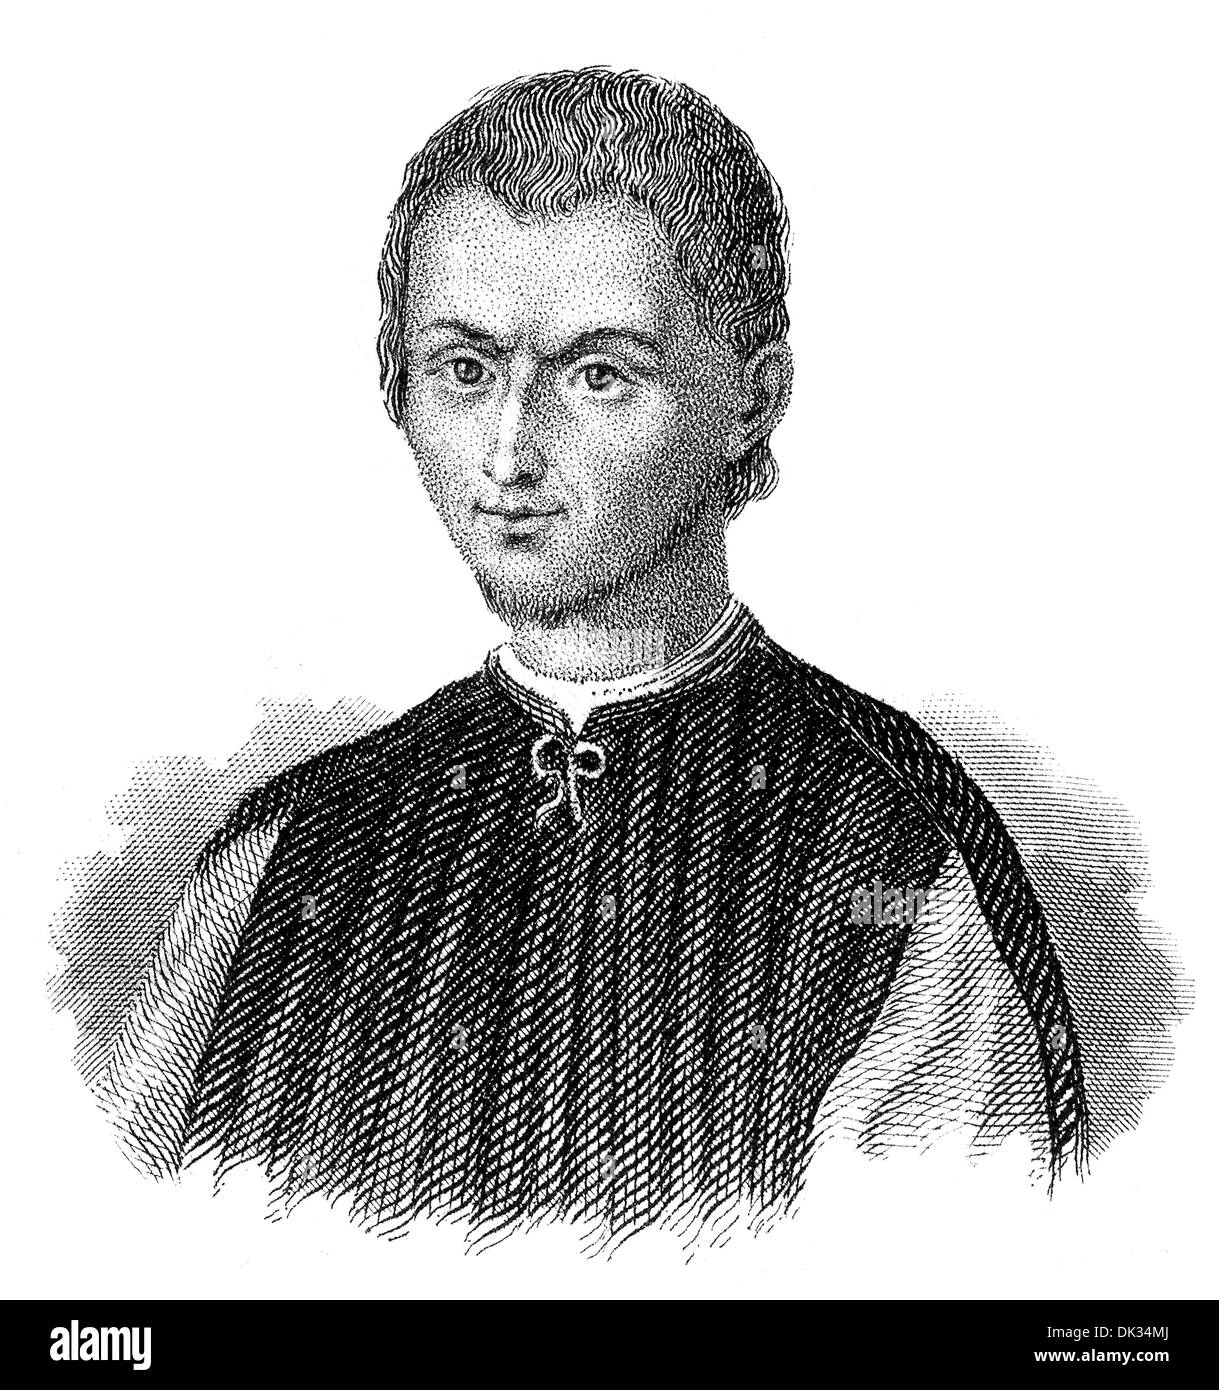 Niccolò di Bernardo dei Machiavelli, 1469-1527, ein italienischer Politiker, Diplomat, Philosoph, Historiker und Dichter Stockfoto